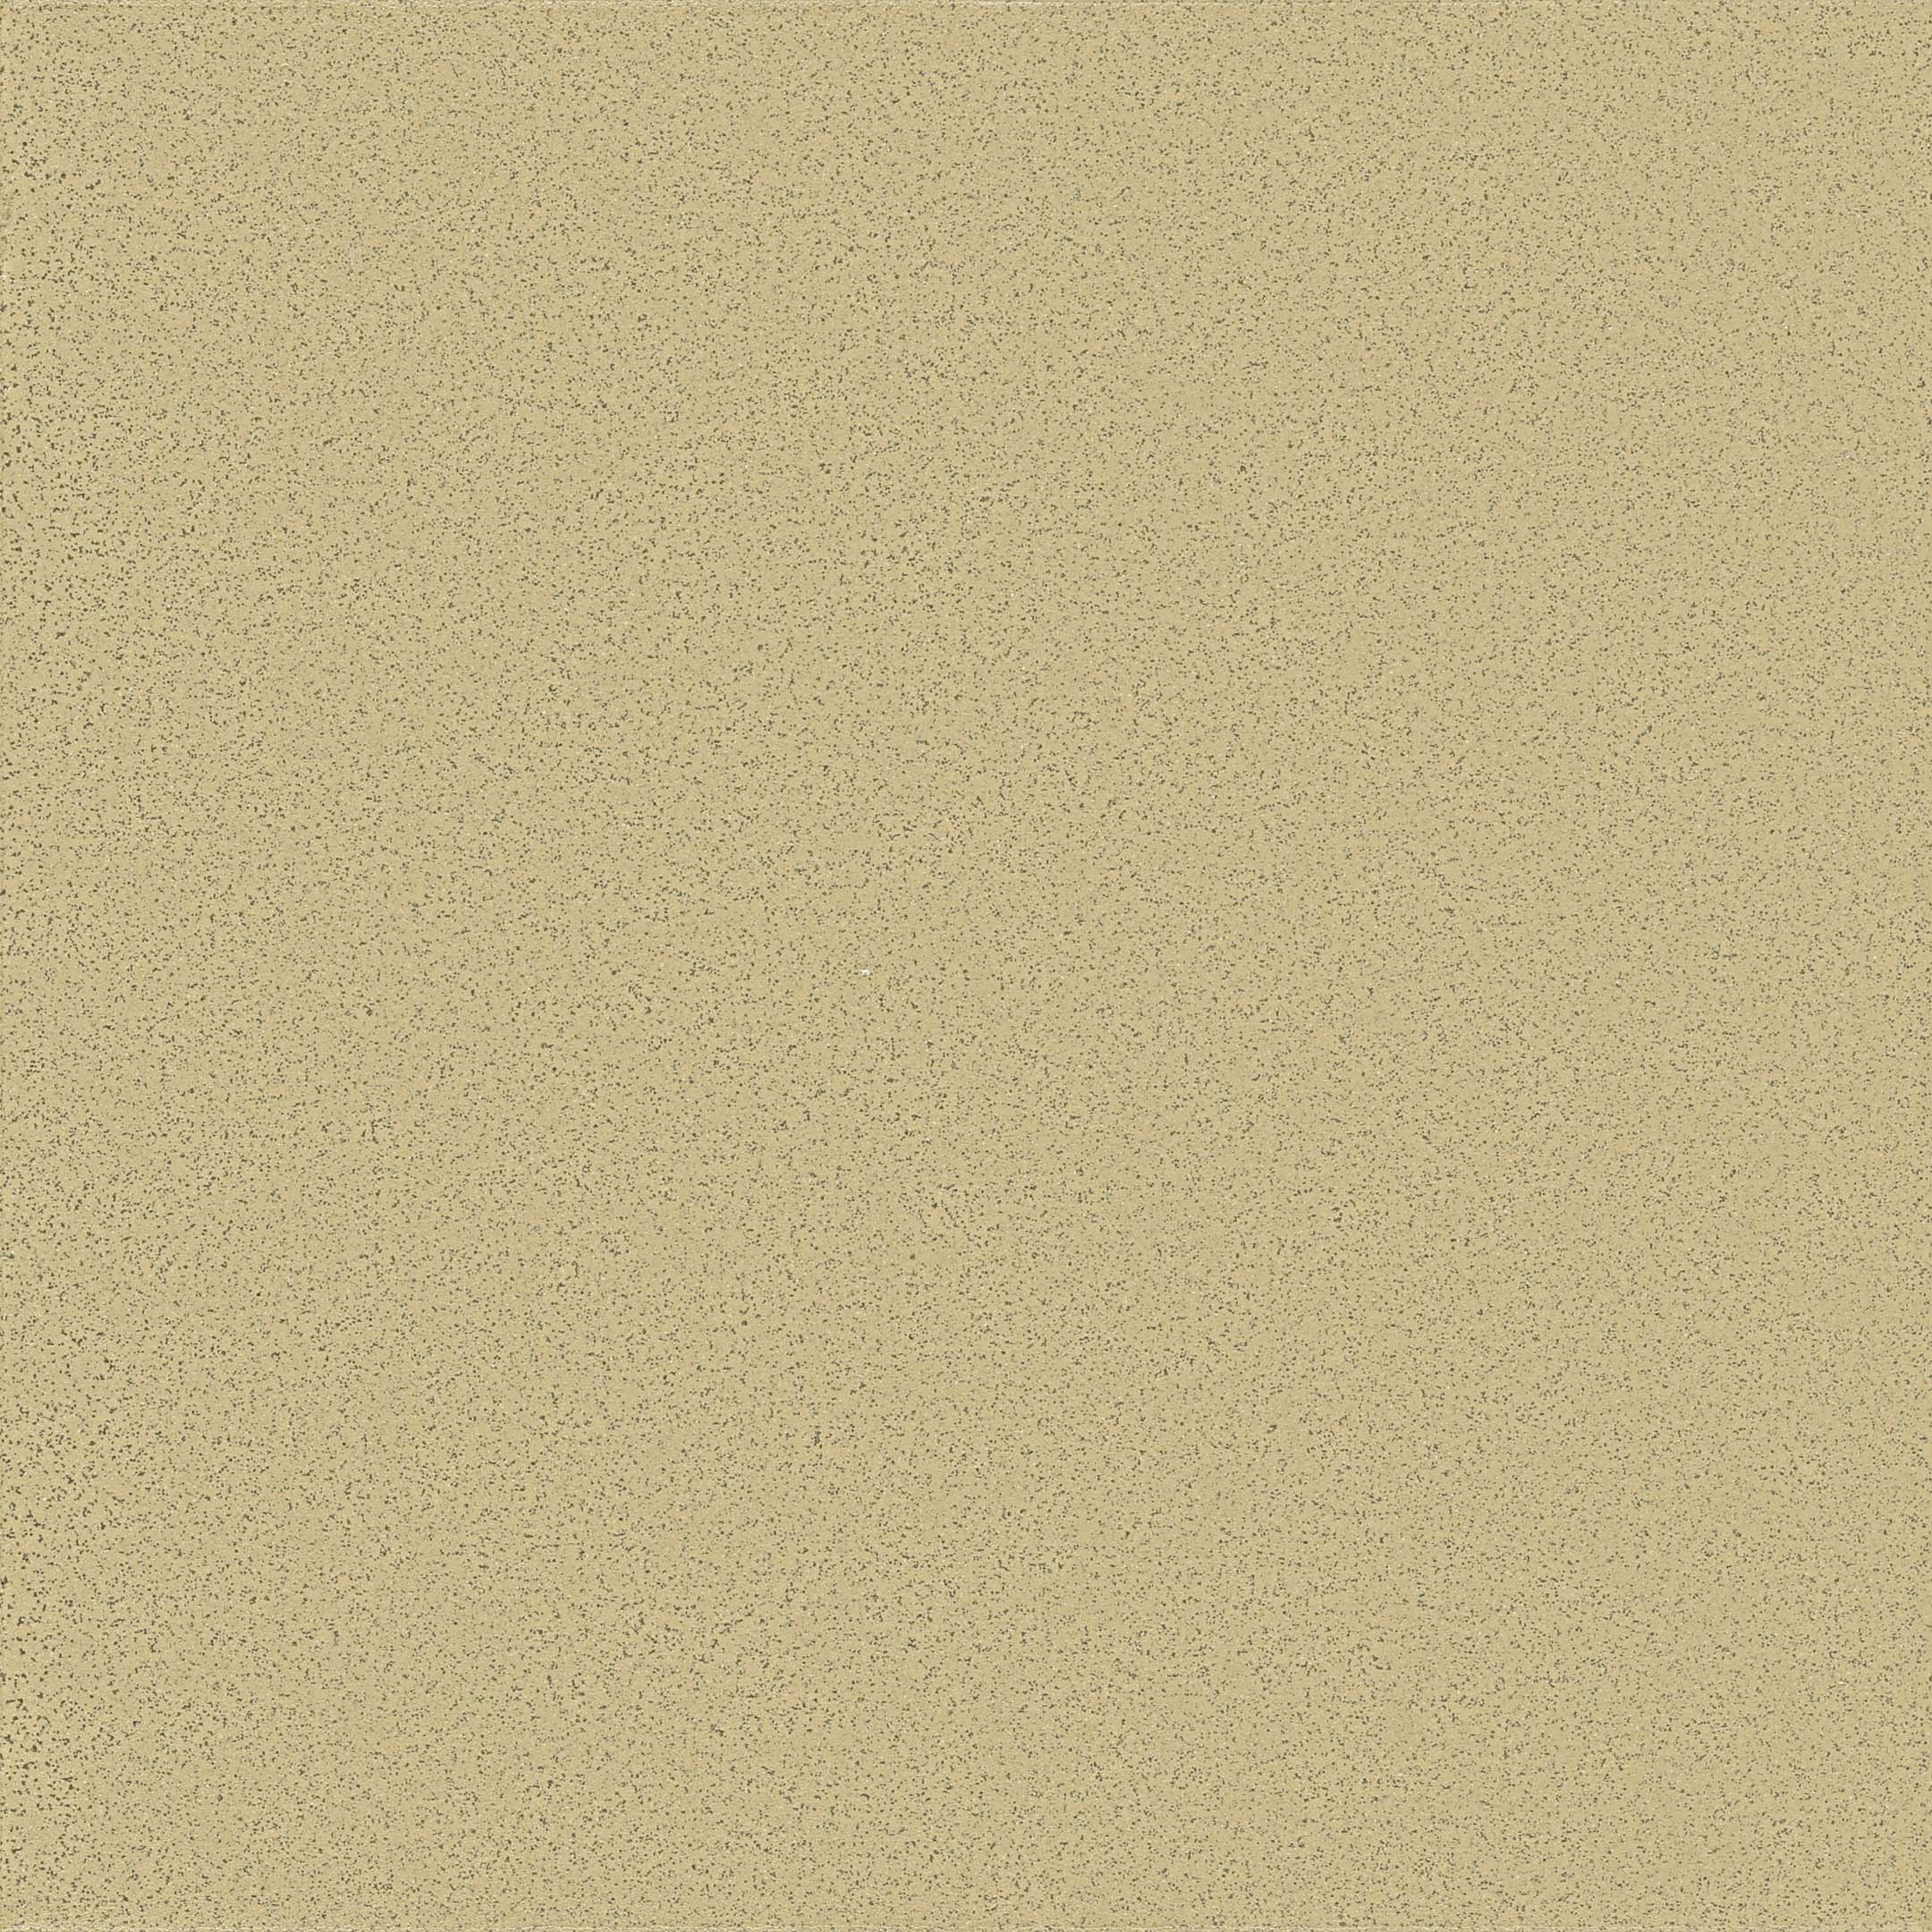 Керамогранит Quadro Decor Грес серый соль-перец 300х300х8 мм (16 шт.=1,44 кв.м) керамогранит quadro decor соль перец 30x30 см 1 44 м2 неполированный цвет светло серый